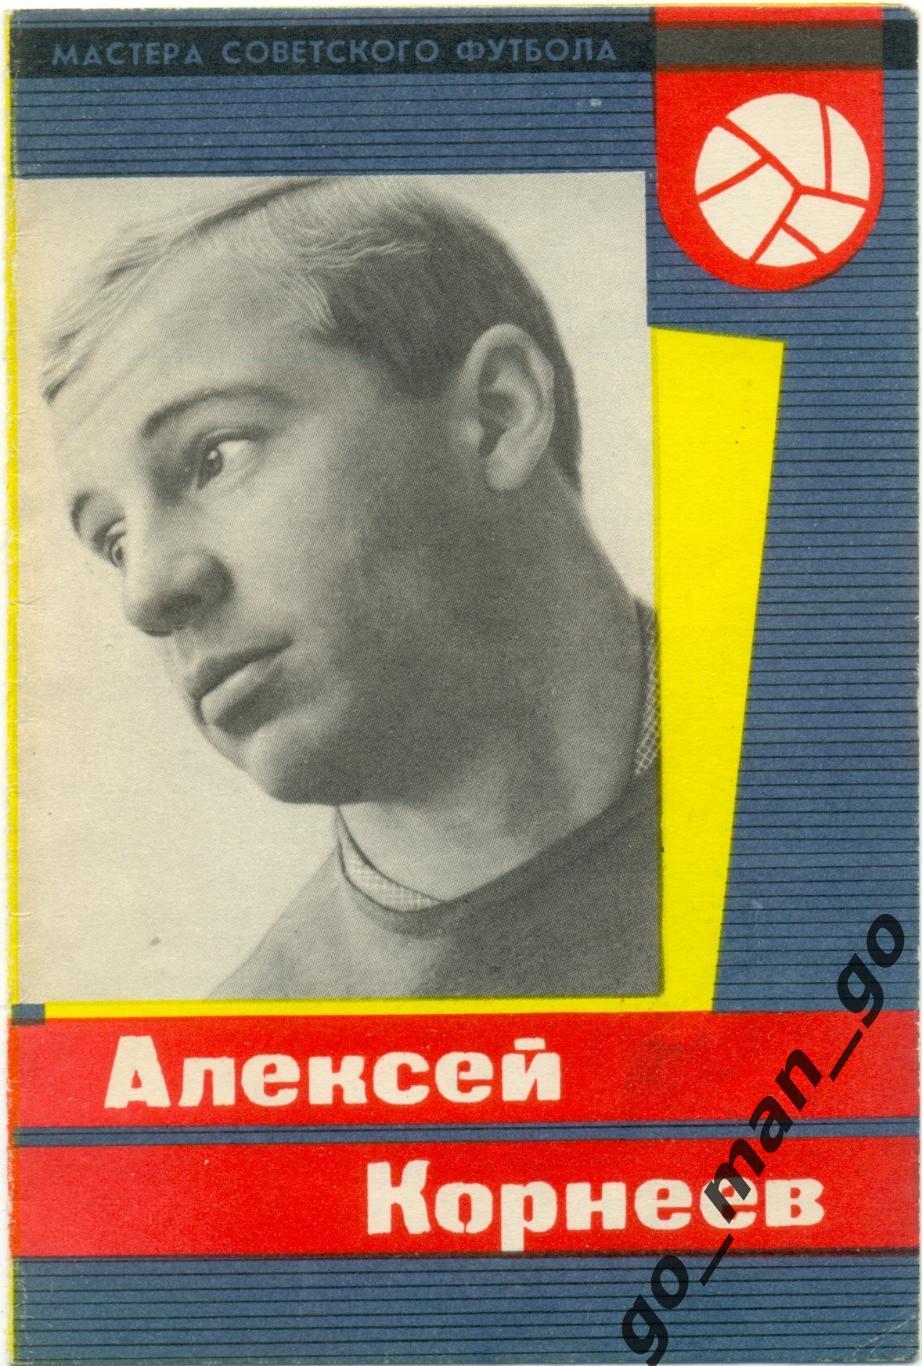 Алексей Корнеев (Спартак Москва). Мастера советского футбола. 1965.